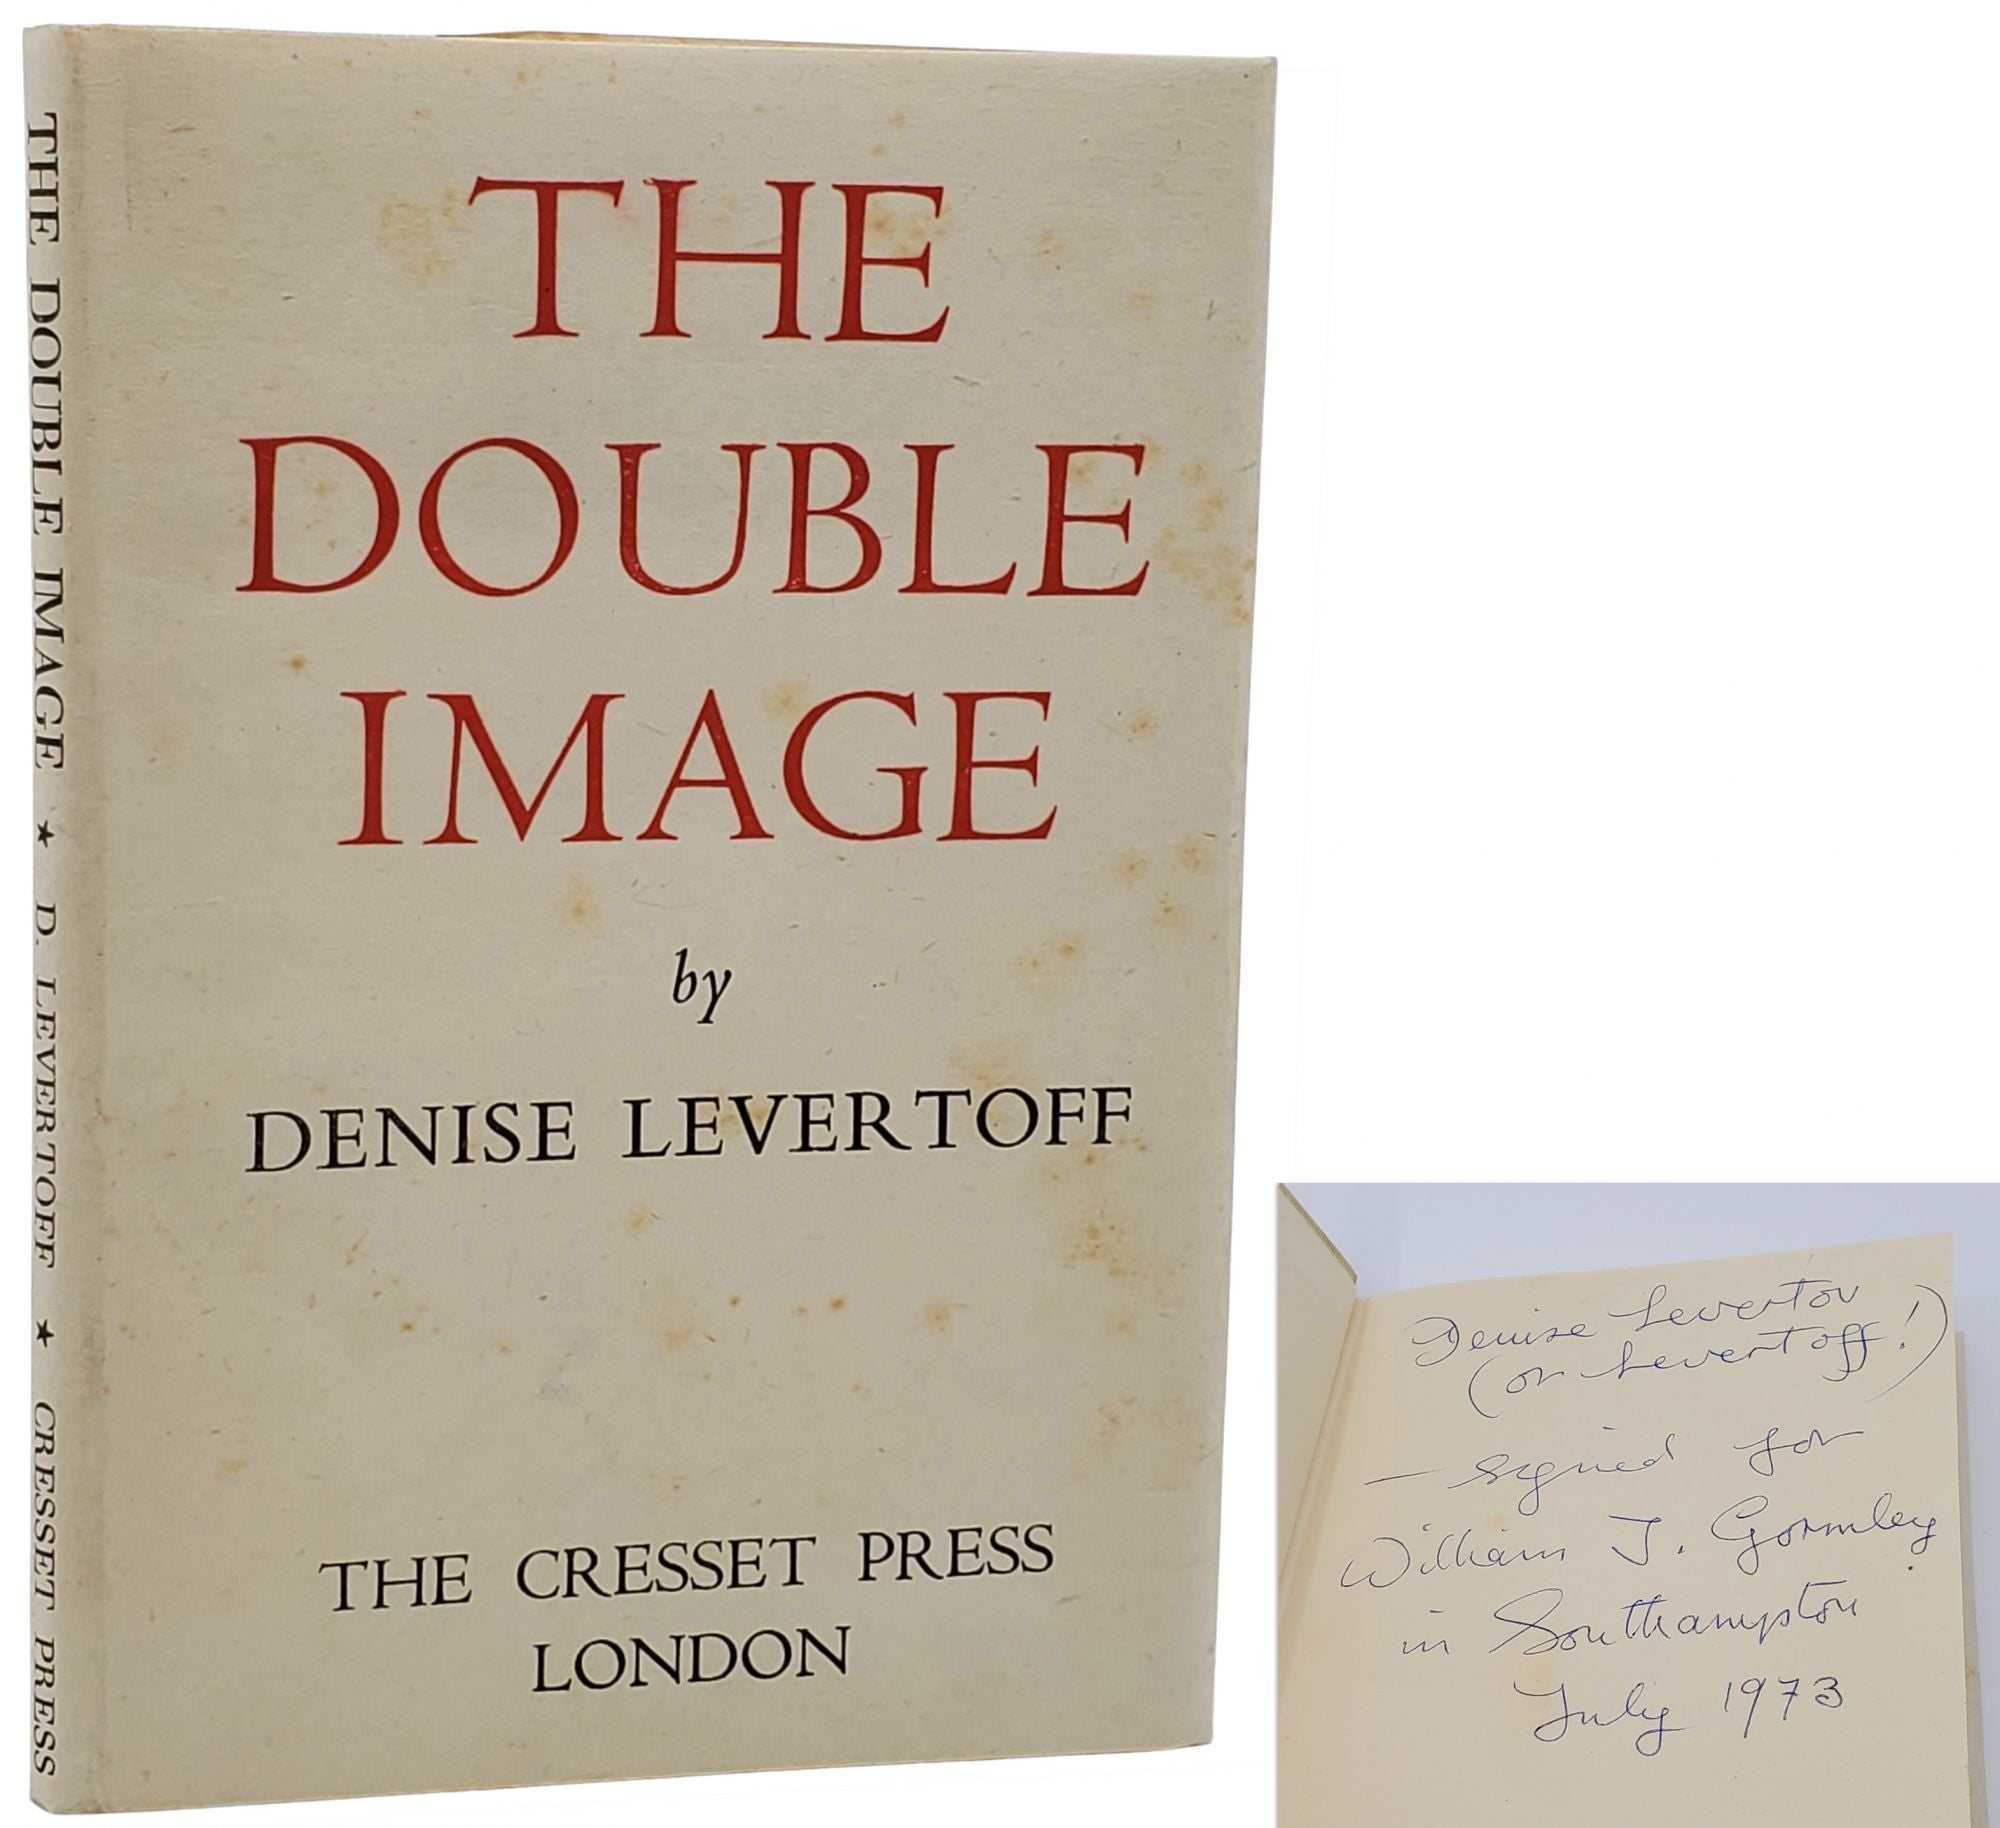 [Book #50633] THE DOUBLE IMAGE. Denise Levertov, as Denise Levertoff.